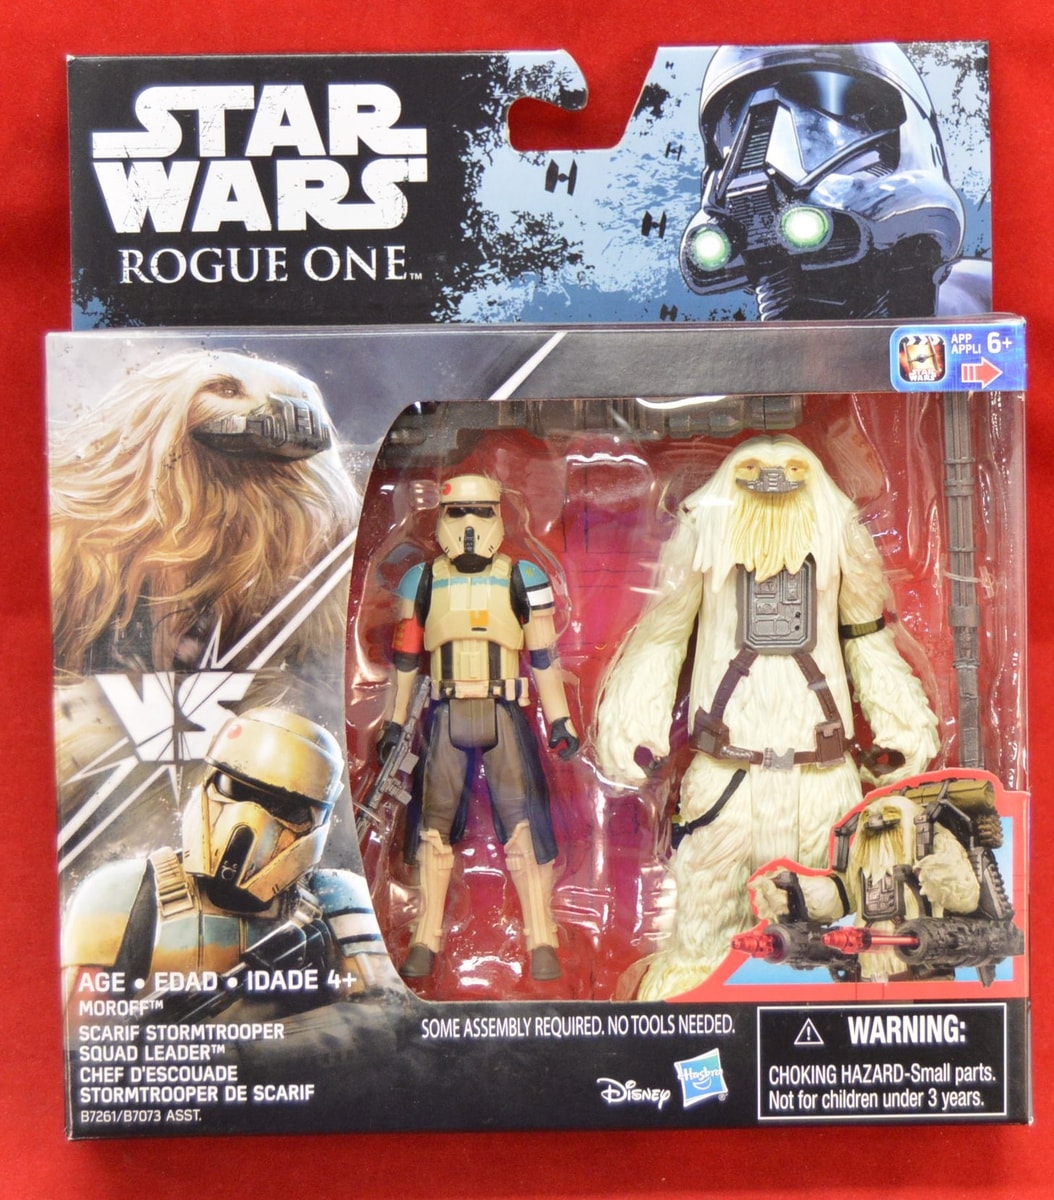 Scarif Stormtrooper Squad Leader Moroff STAR WARS Rogue One 2 Pack MOC 